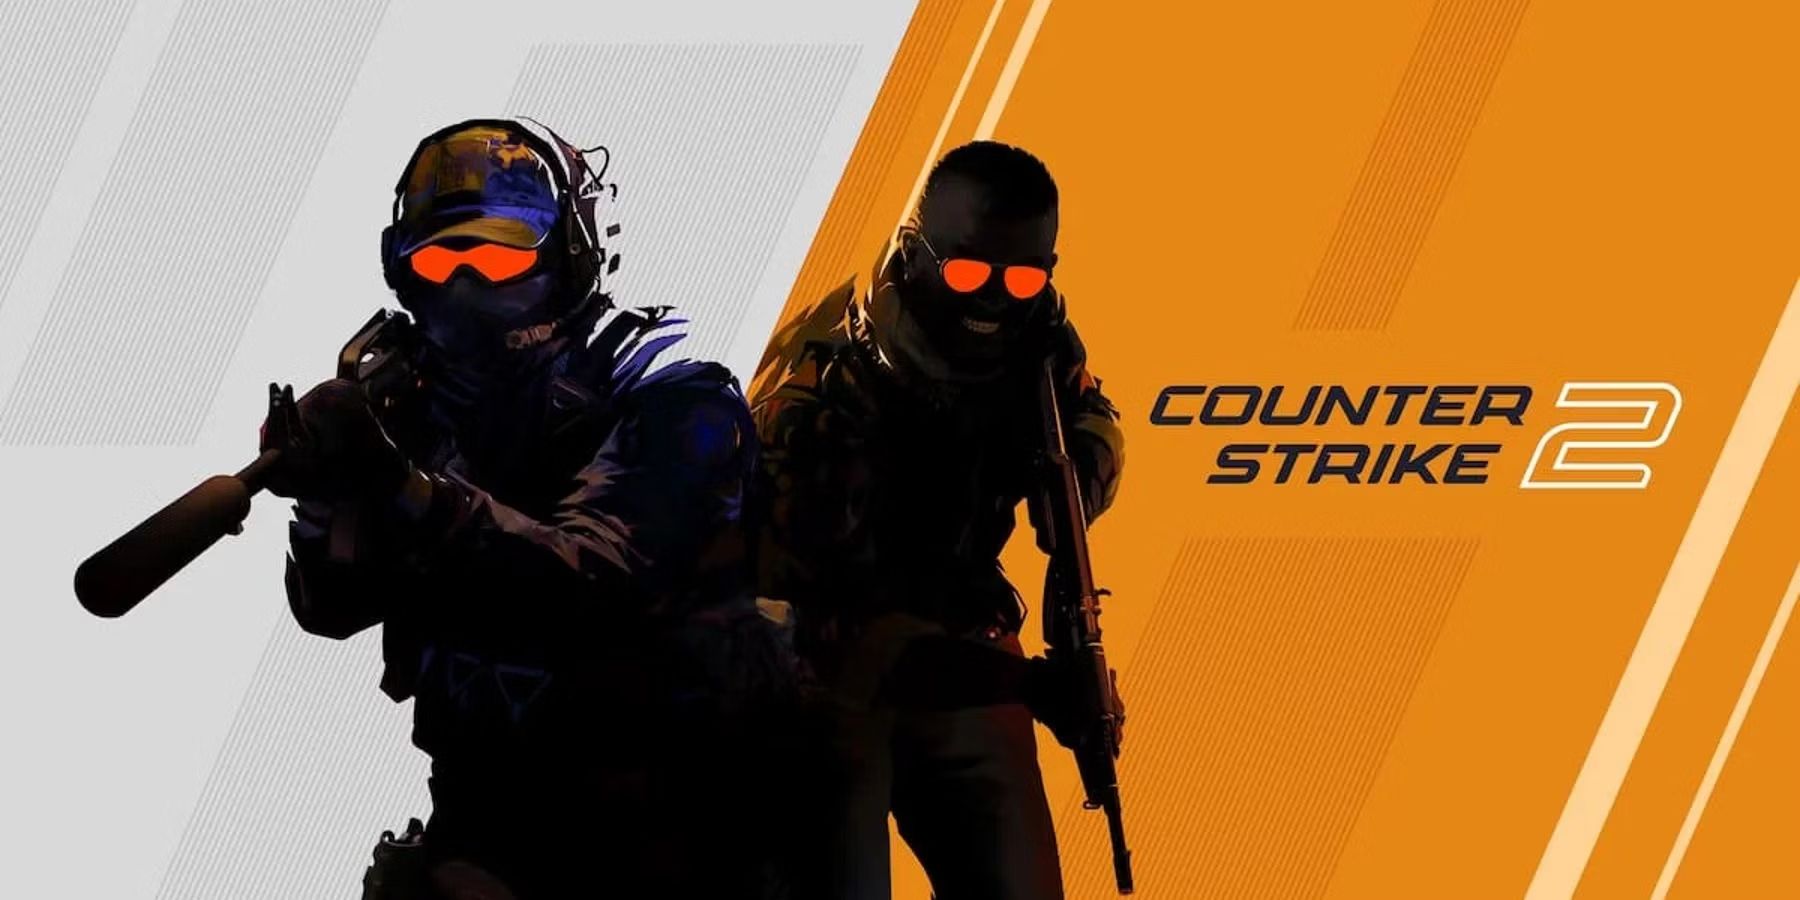 Counter Strike 2 Removes CSGO Achievements